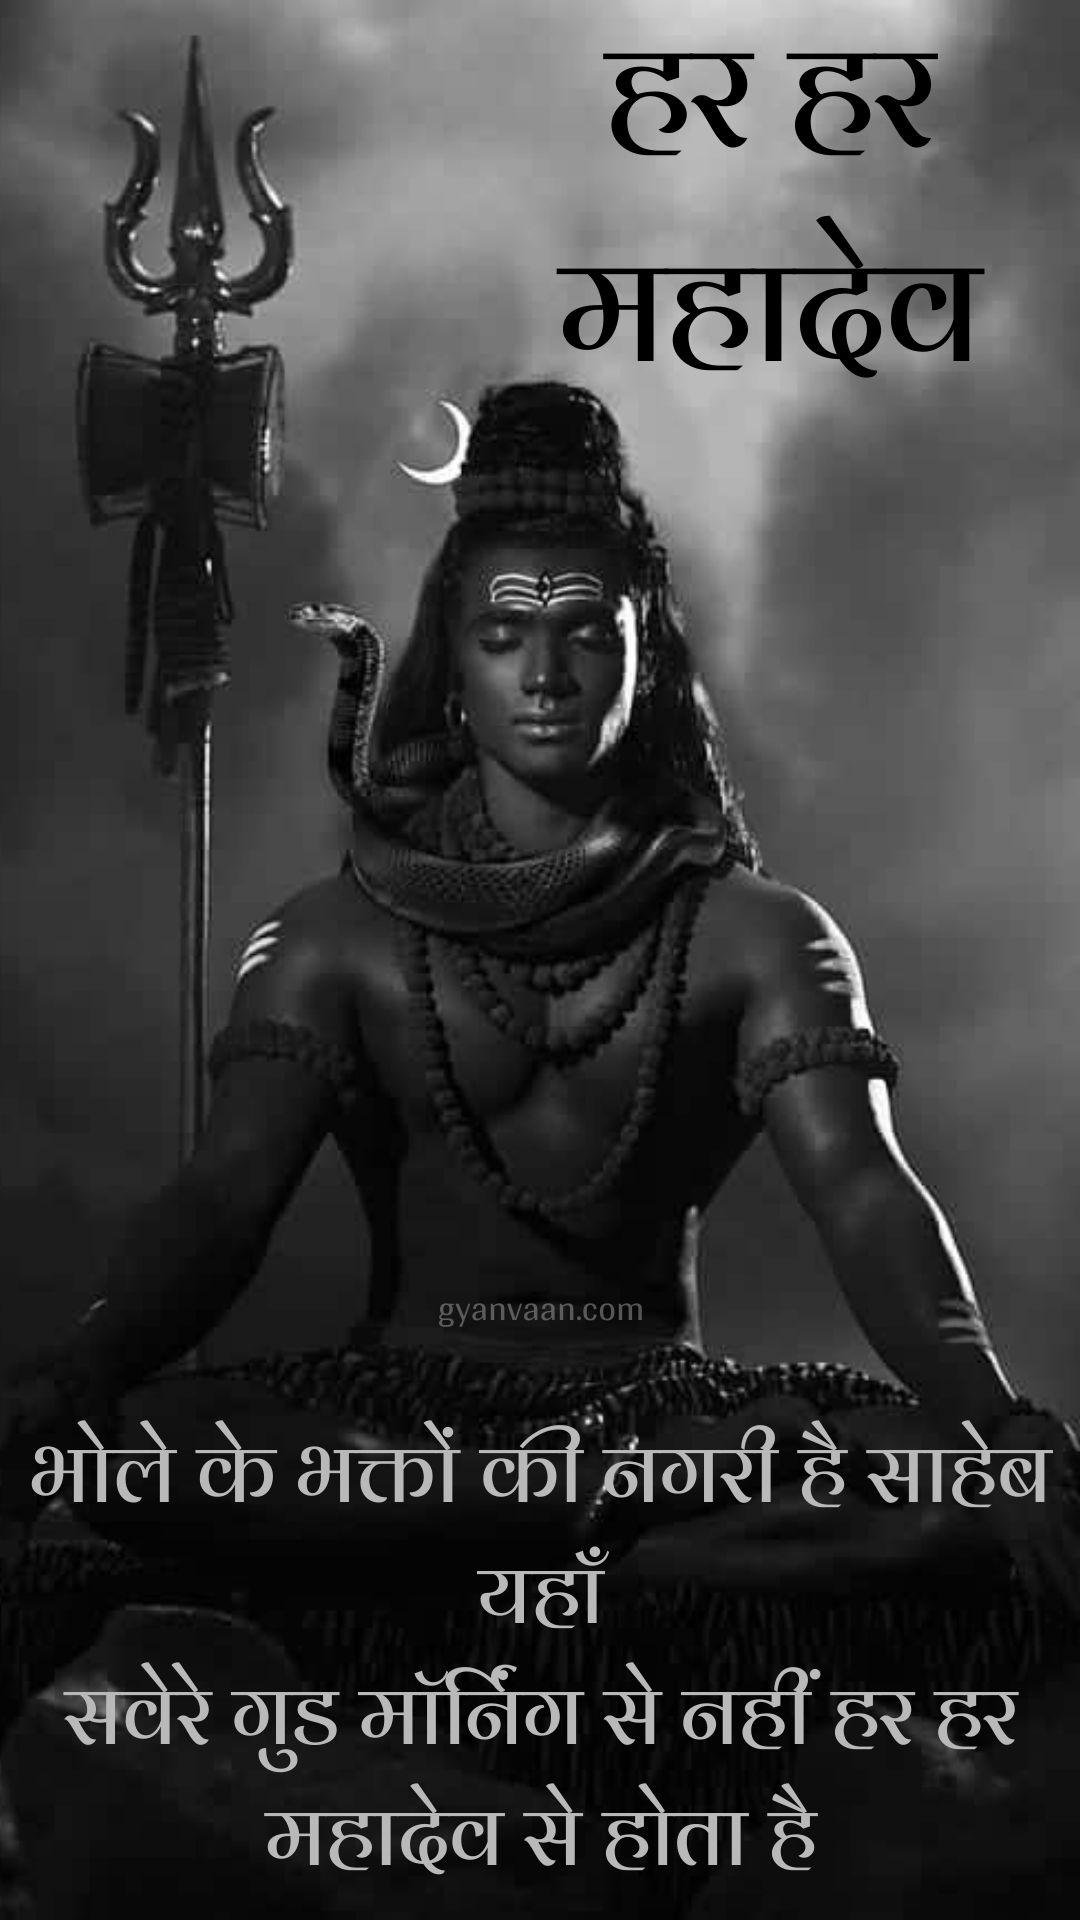 Lord Shiva Mahadev Quotes And Mahakal Status In Hindi For Mobile 8 - Shiva Quotes